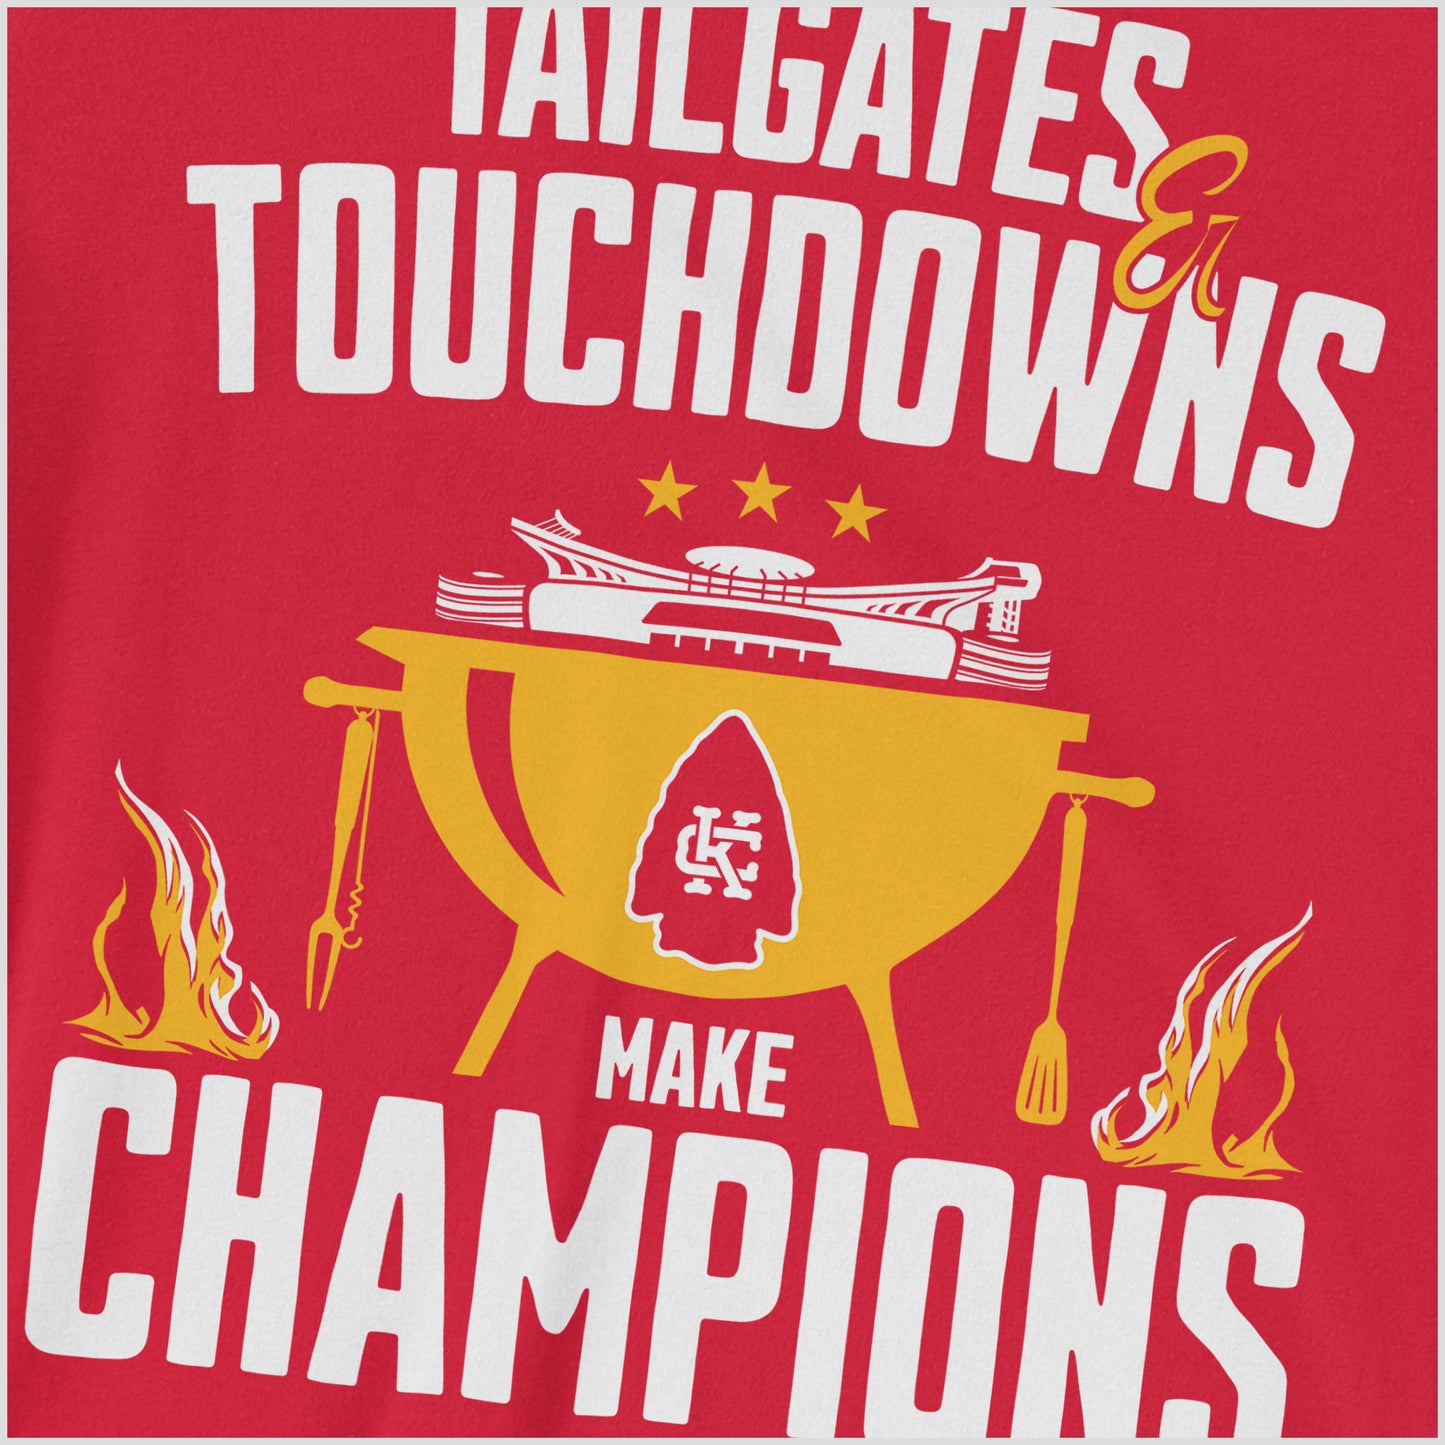 Tailgates & Touchdowns - Kansas City Chiefs T-Shirt